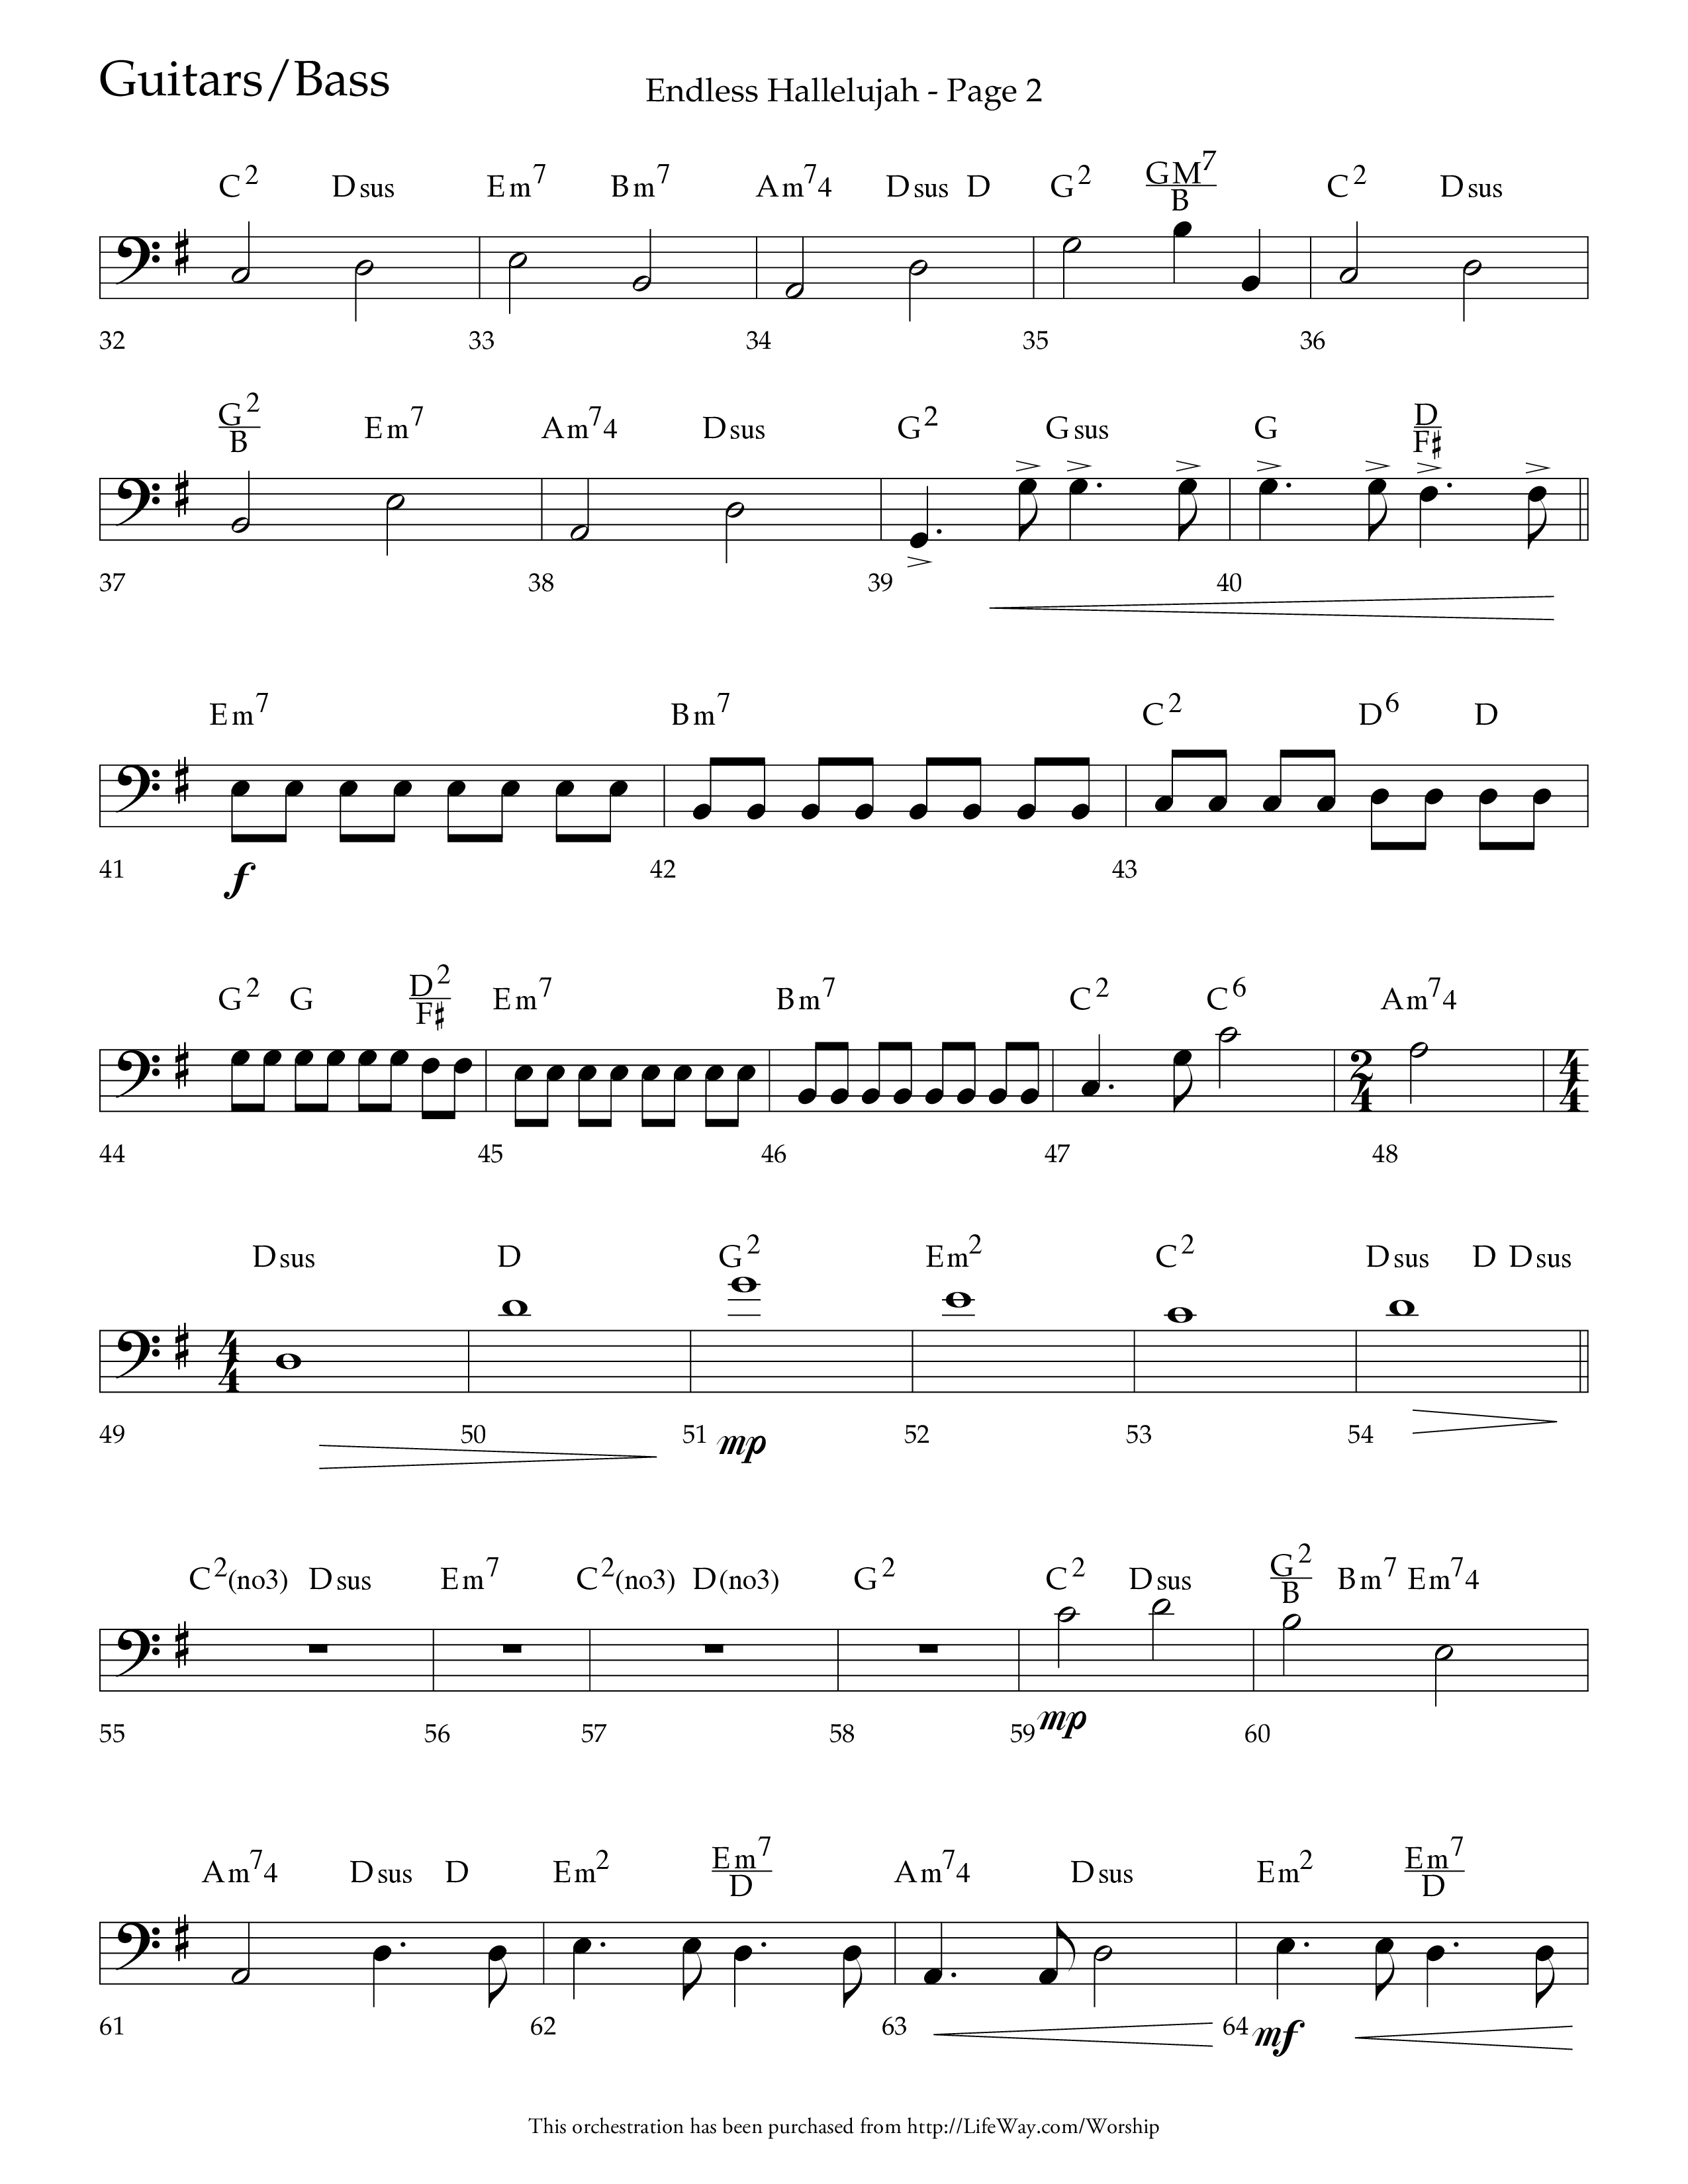 Endless Hallelujah (Choral Anthem SATB) Guitar (Lifeway Choral / Arr. Tom Fettke / Arr. Thomas Grassi / Orch. Michael Lawrence)